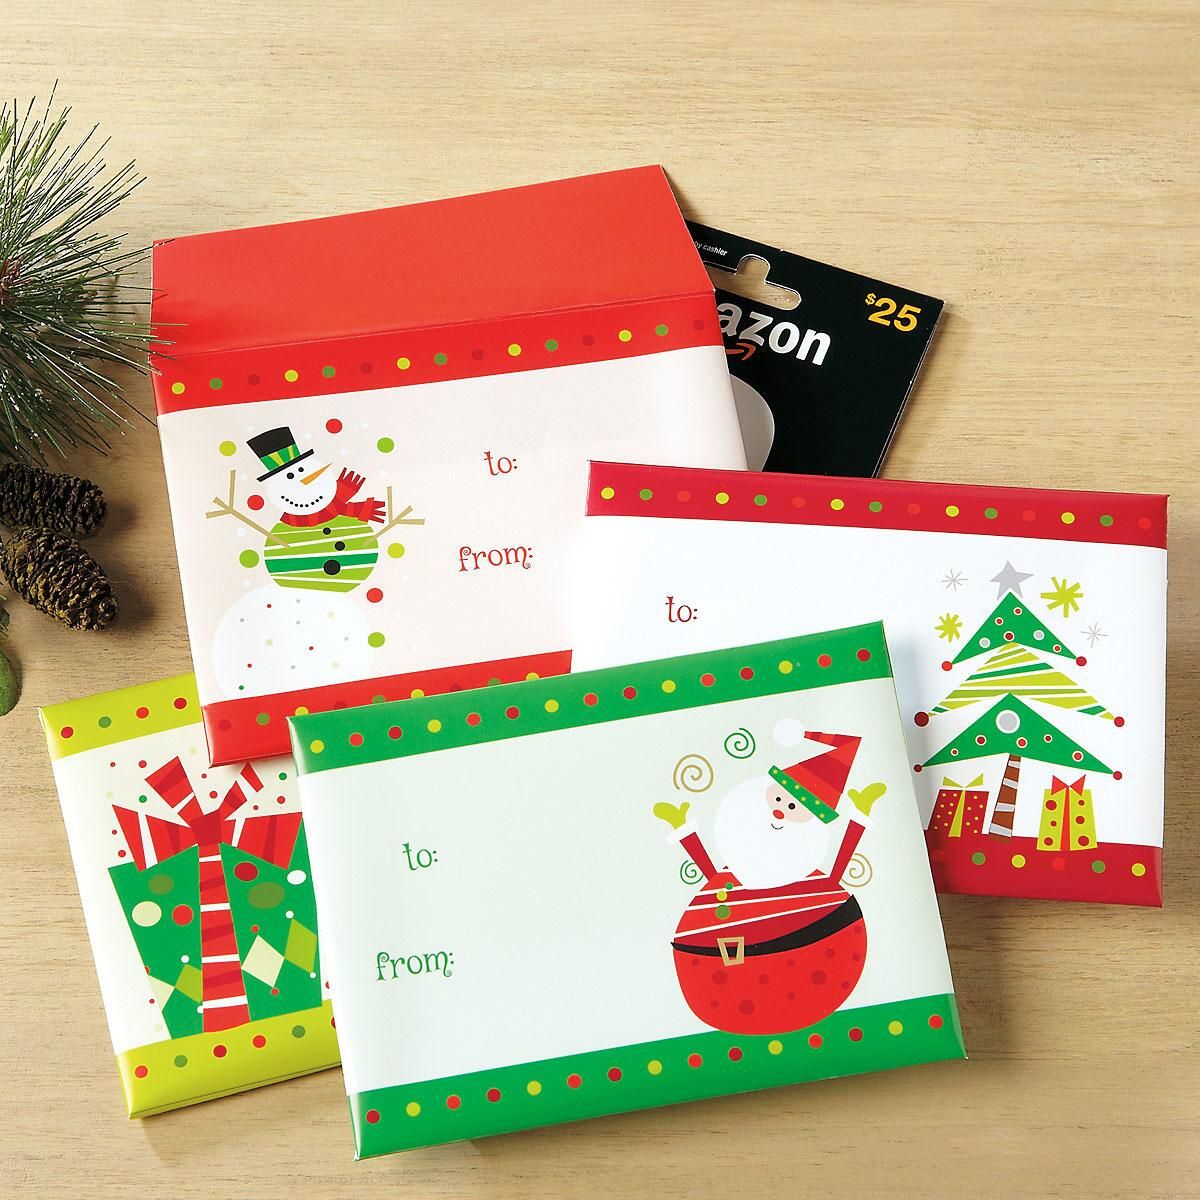 Festive Gift Card Envelopes Colorful Images